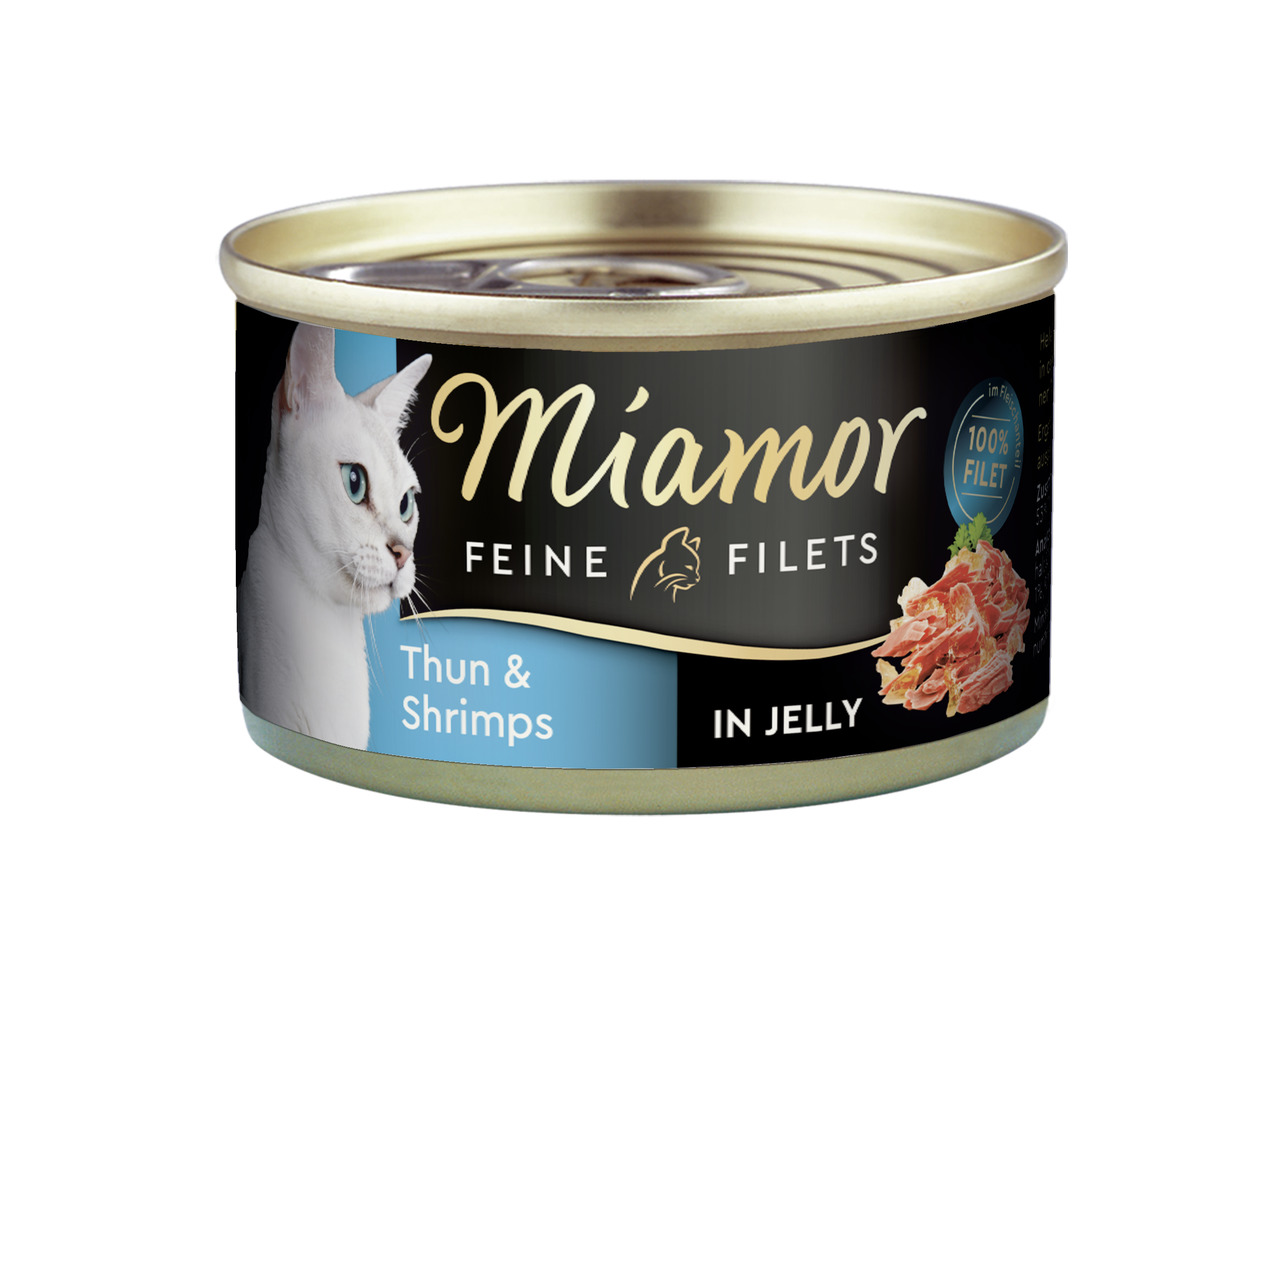 Miamor Feine Filets in Jelly Thun & Shrimps Katzen Nassfutter 100 g